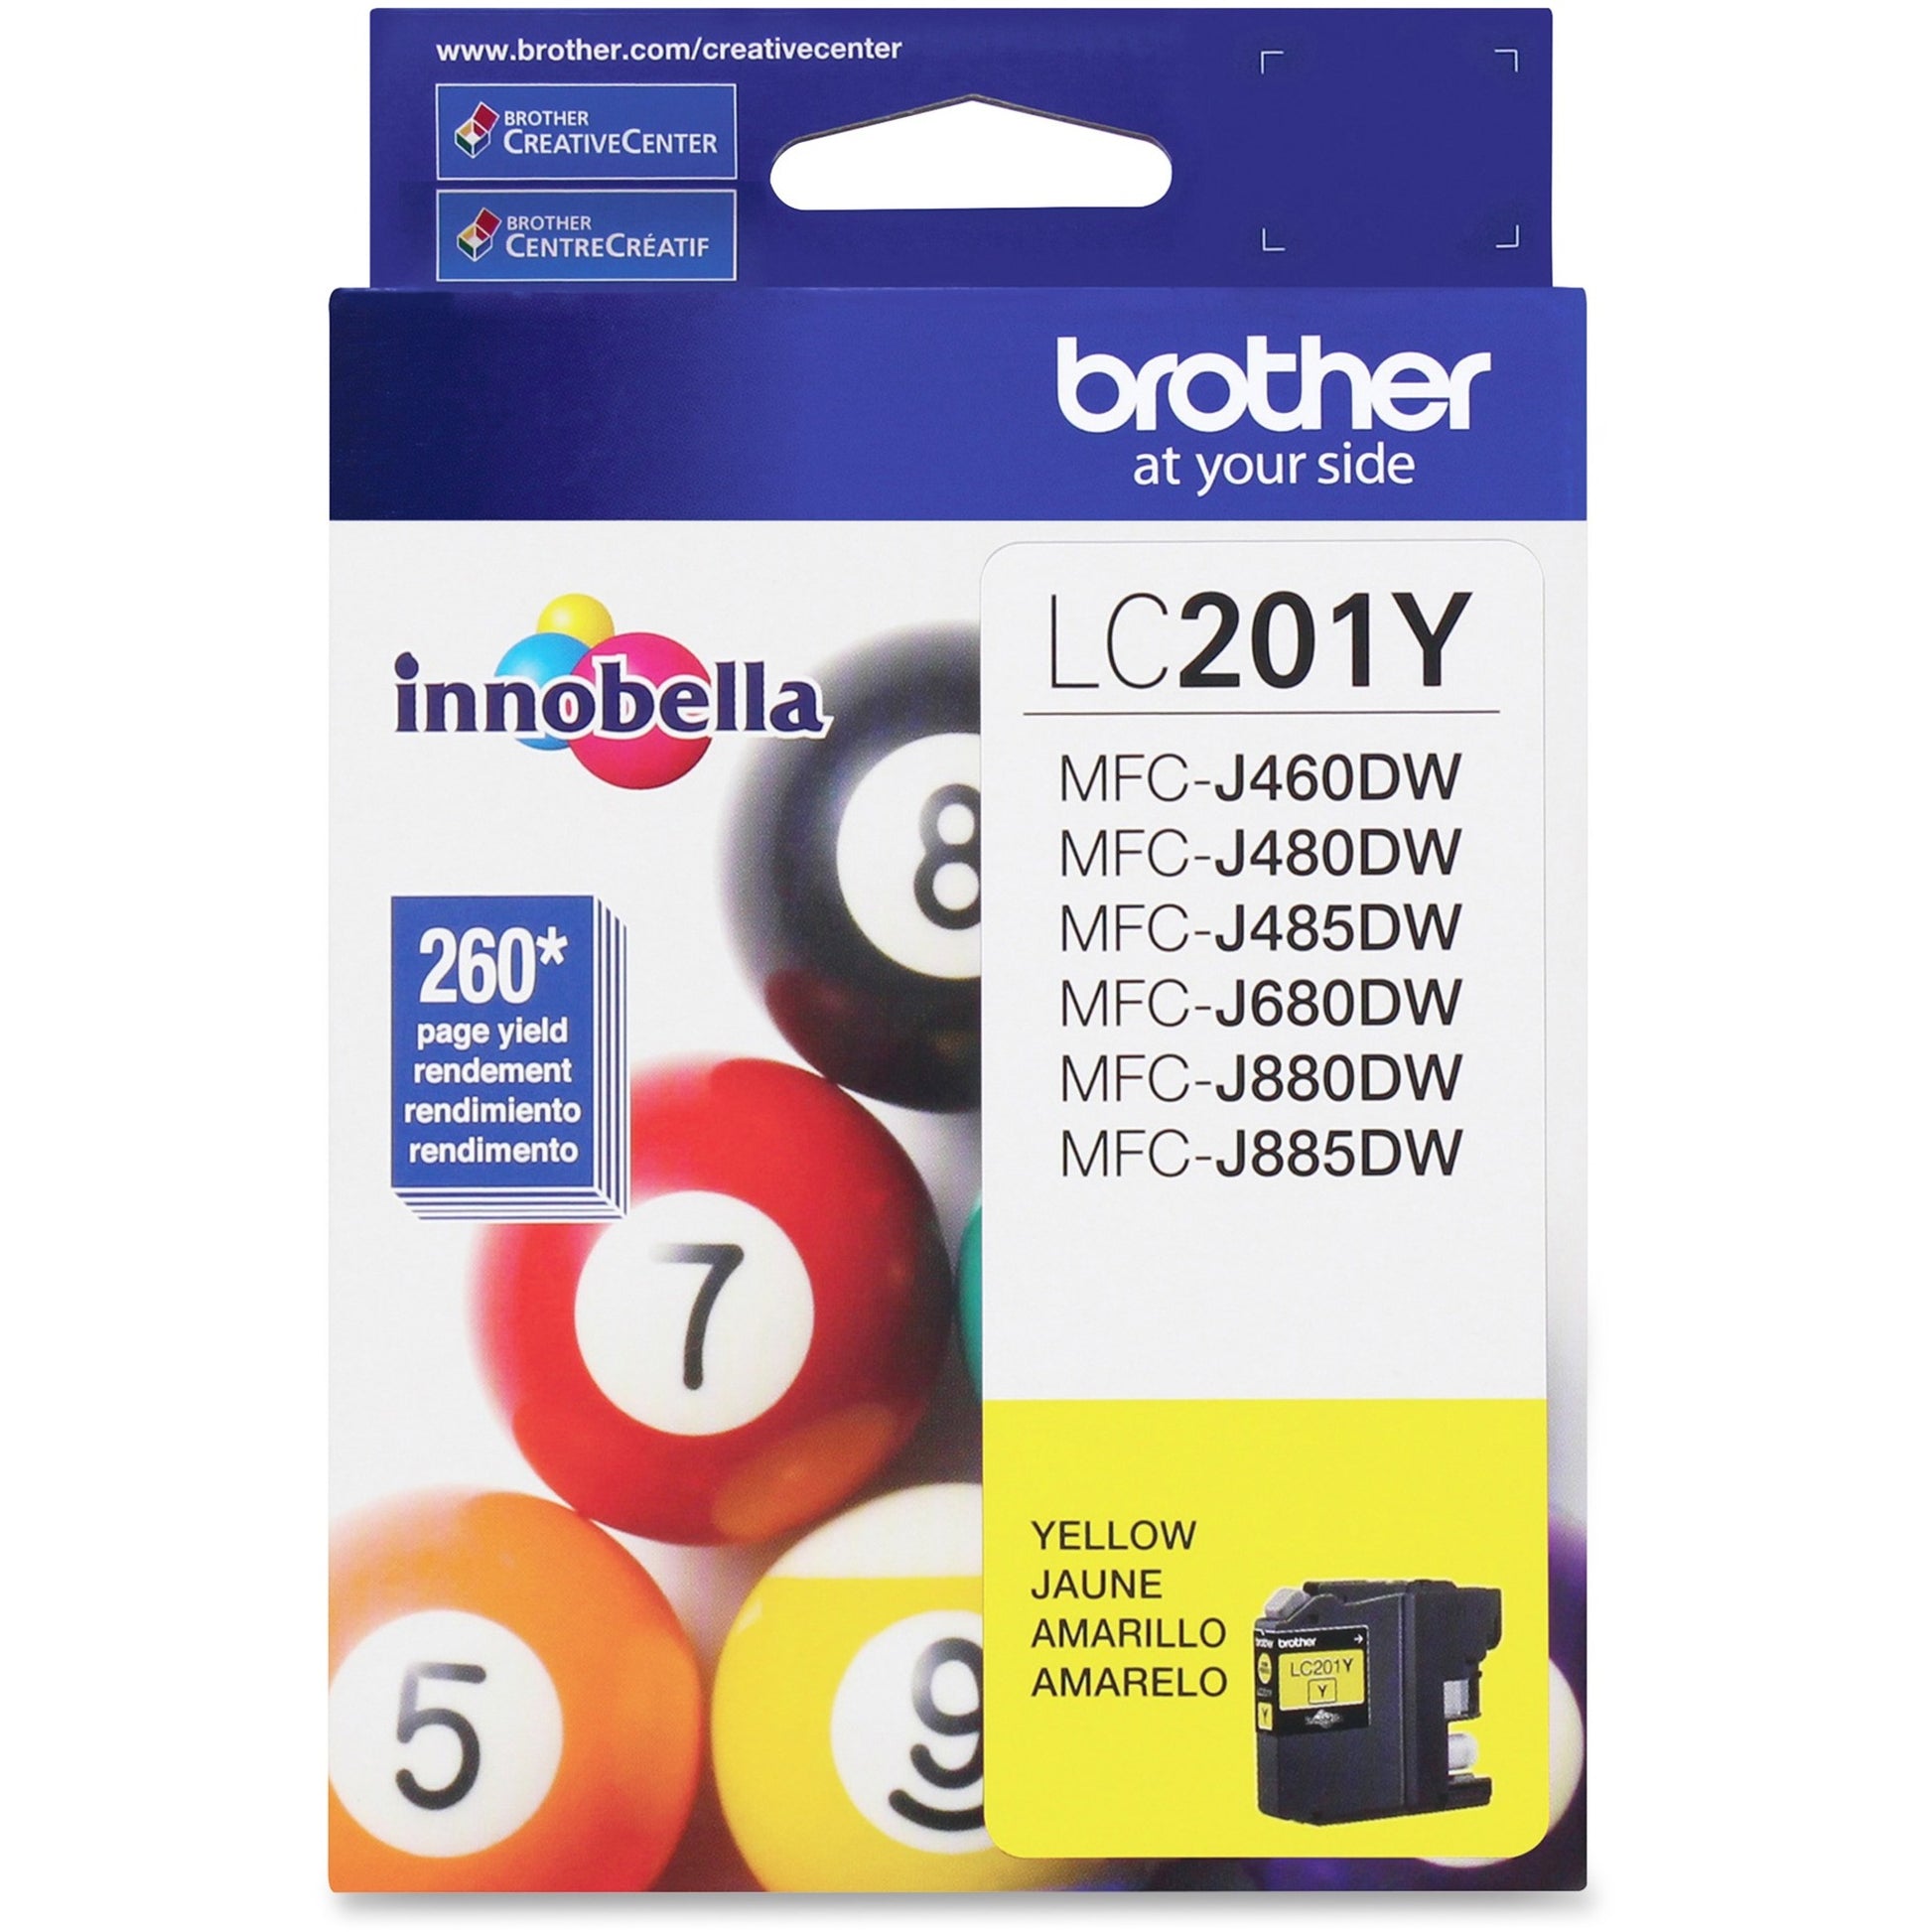 Brother Innobella LC201 Original Ink Cartridge - Yellow